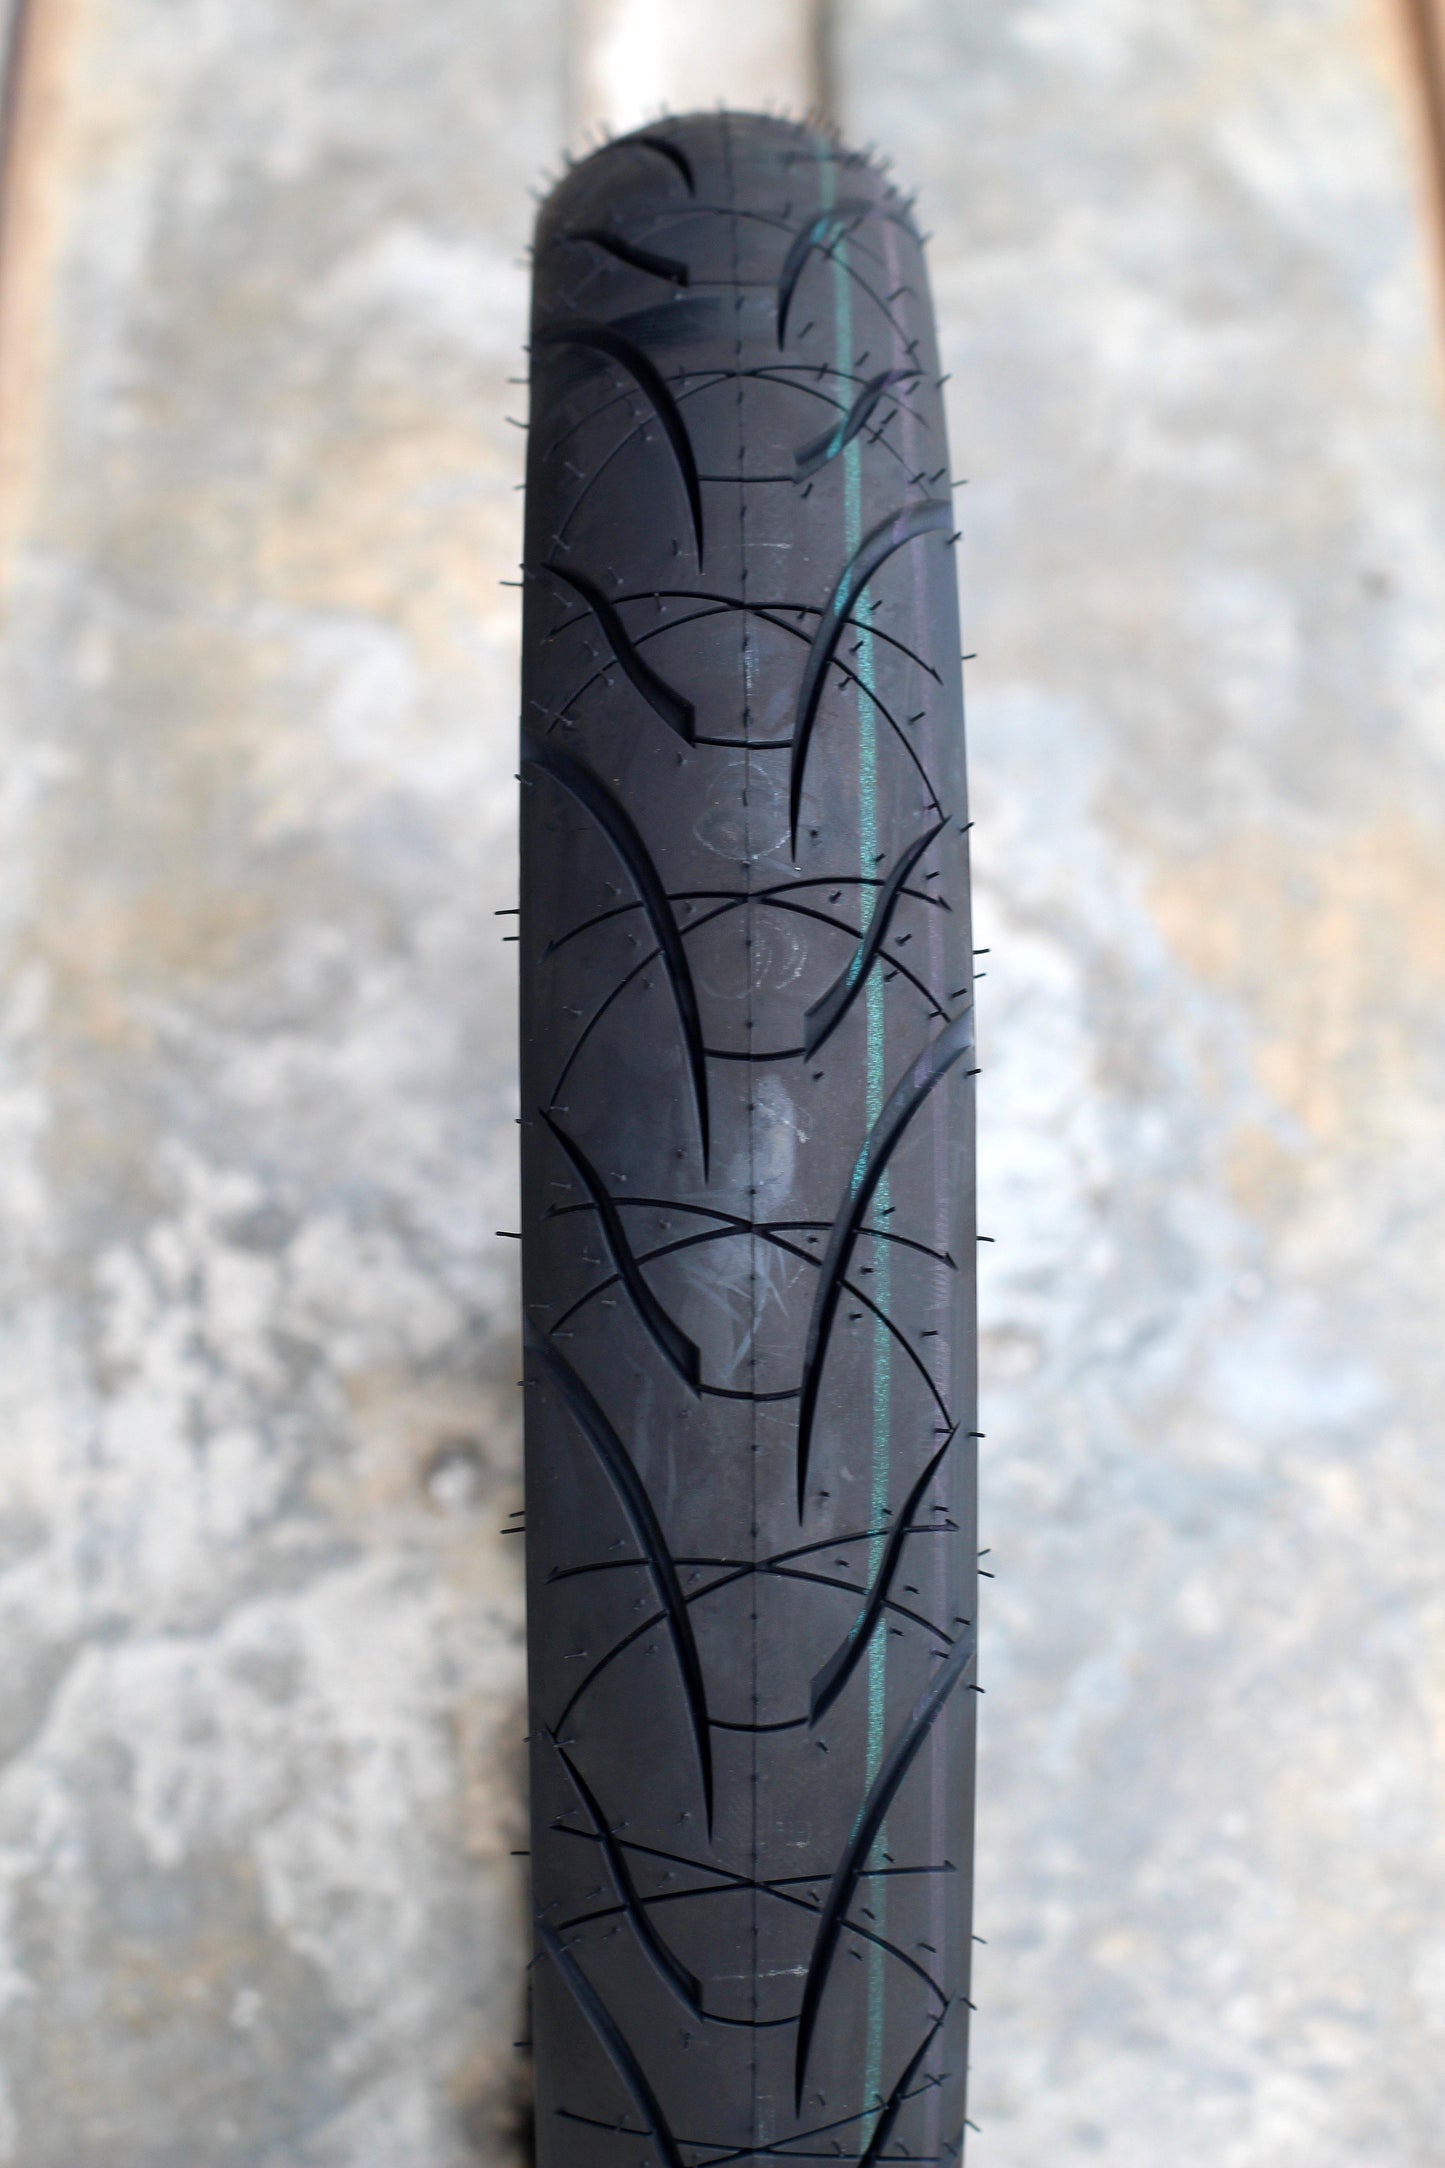 Shinko Tires SR016 Series (70/90-14) - Durian Bikers